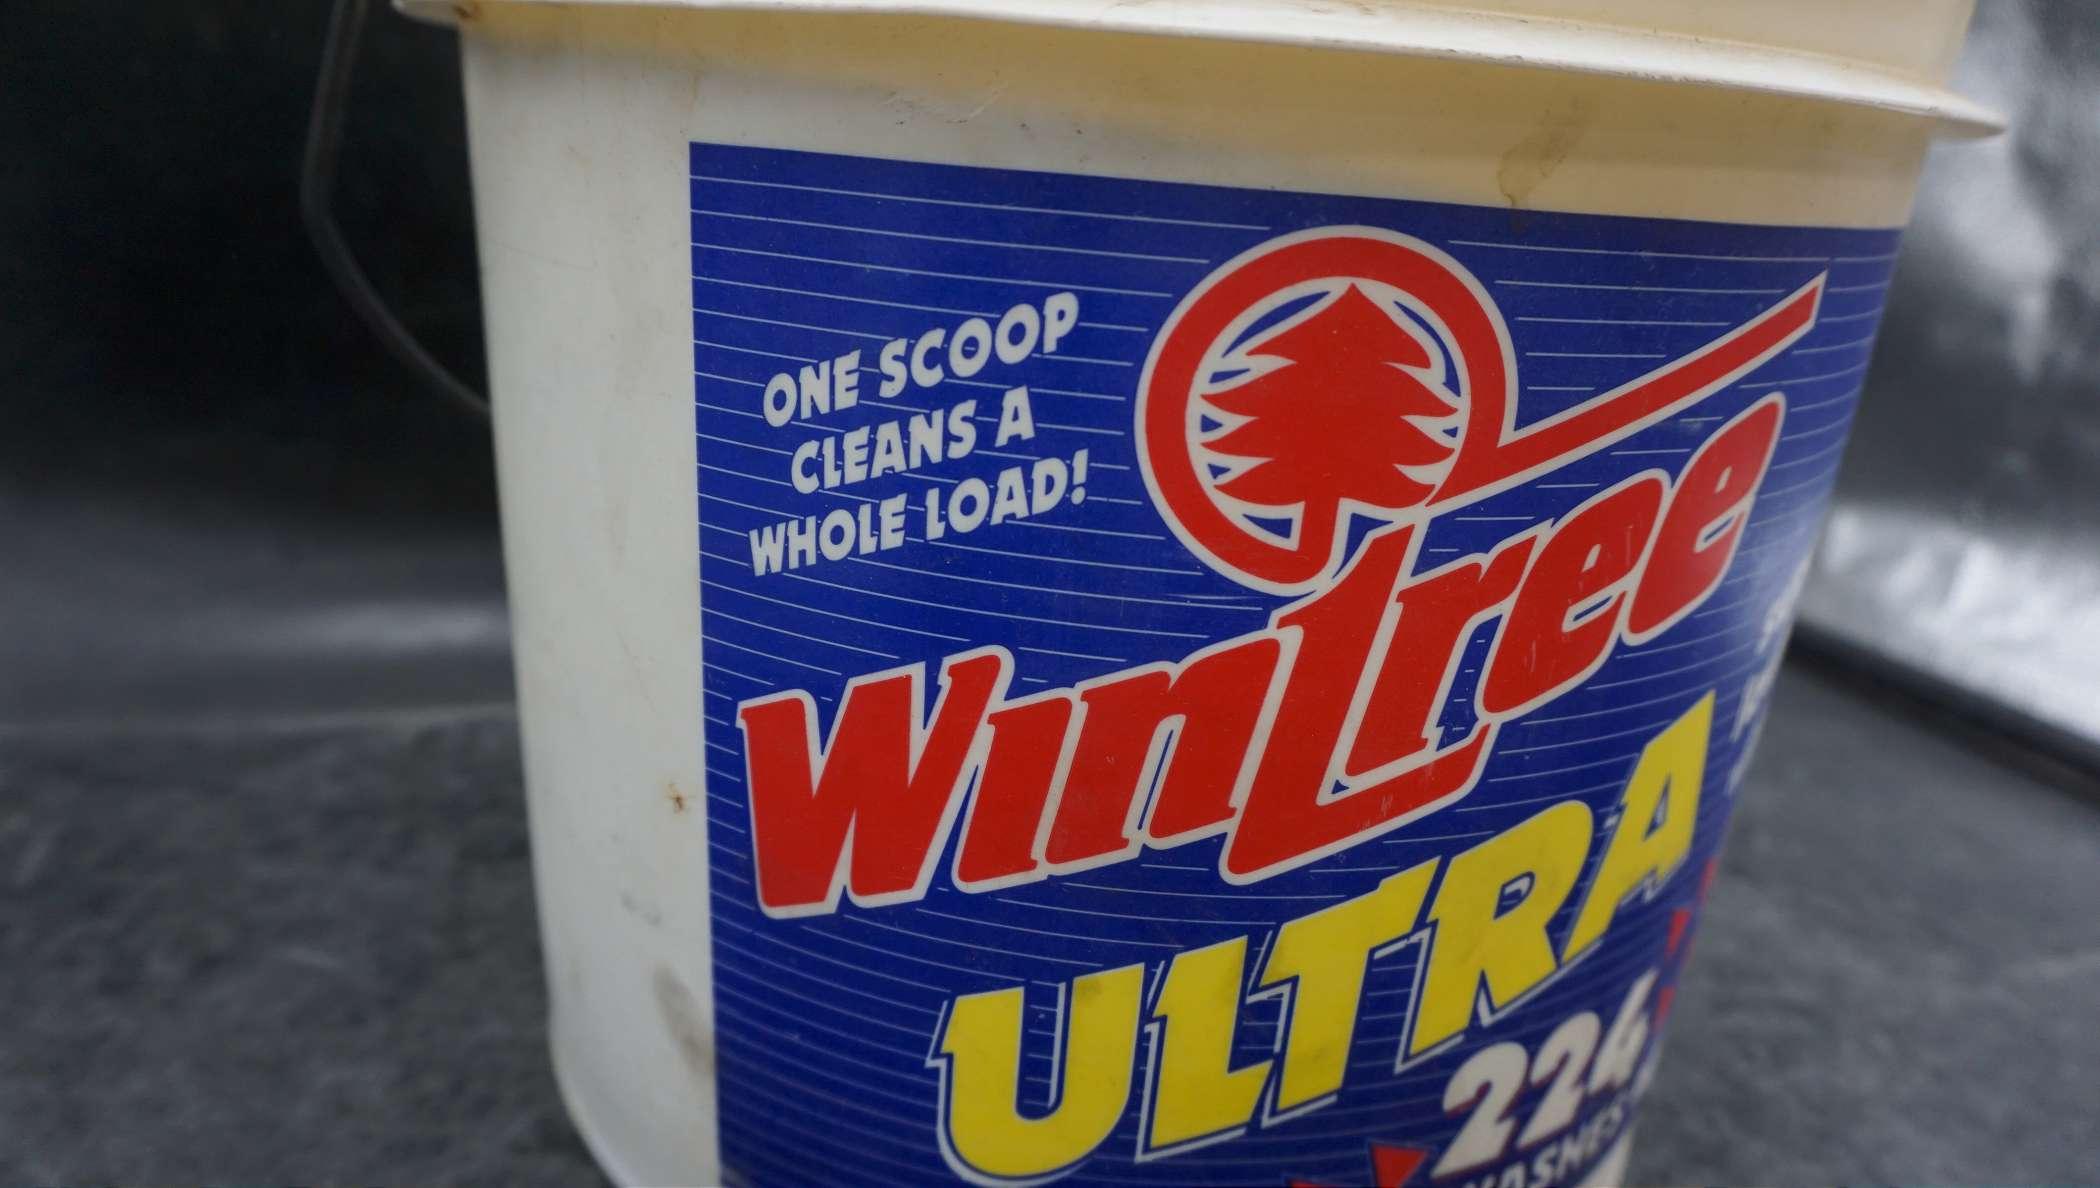 Wintree Ultra Laundry Detergent (Tumbler Mix)